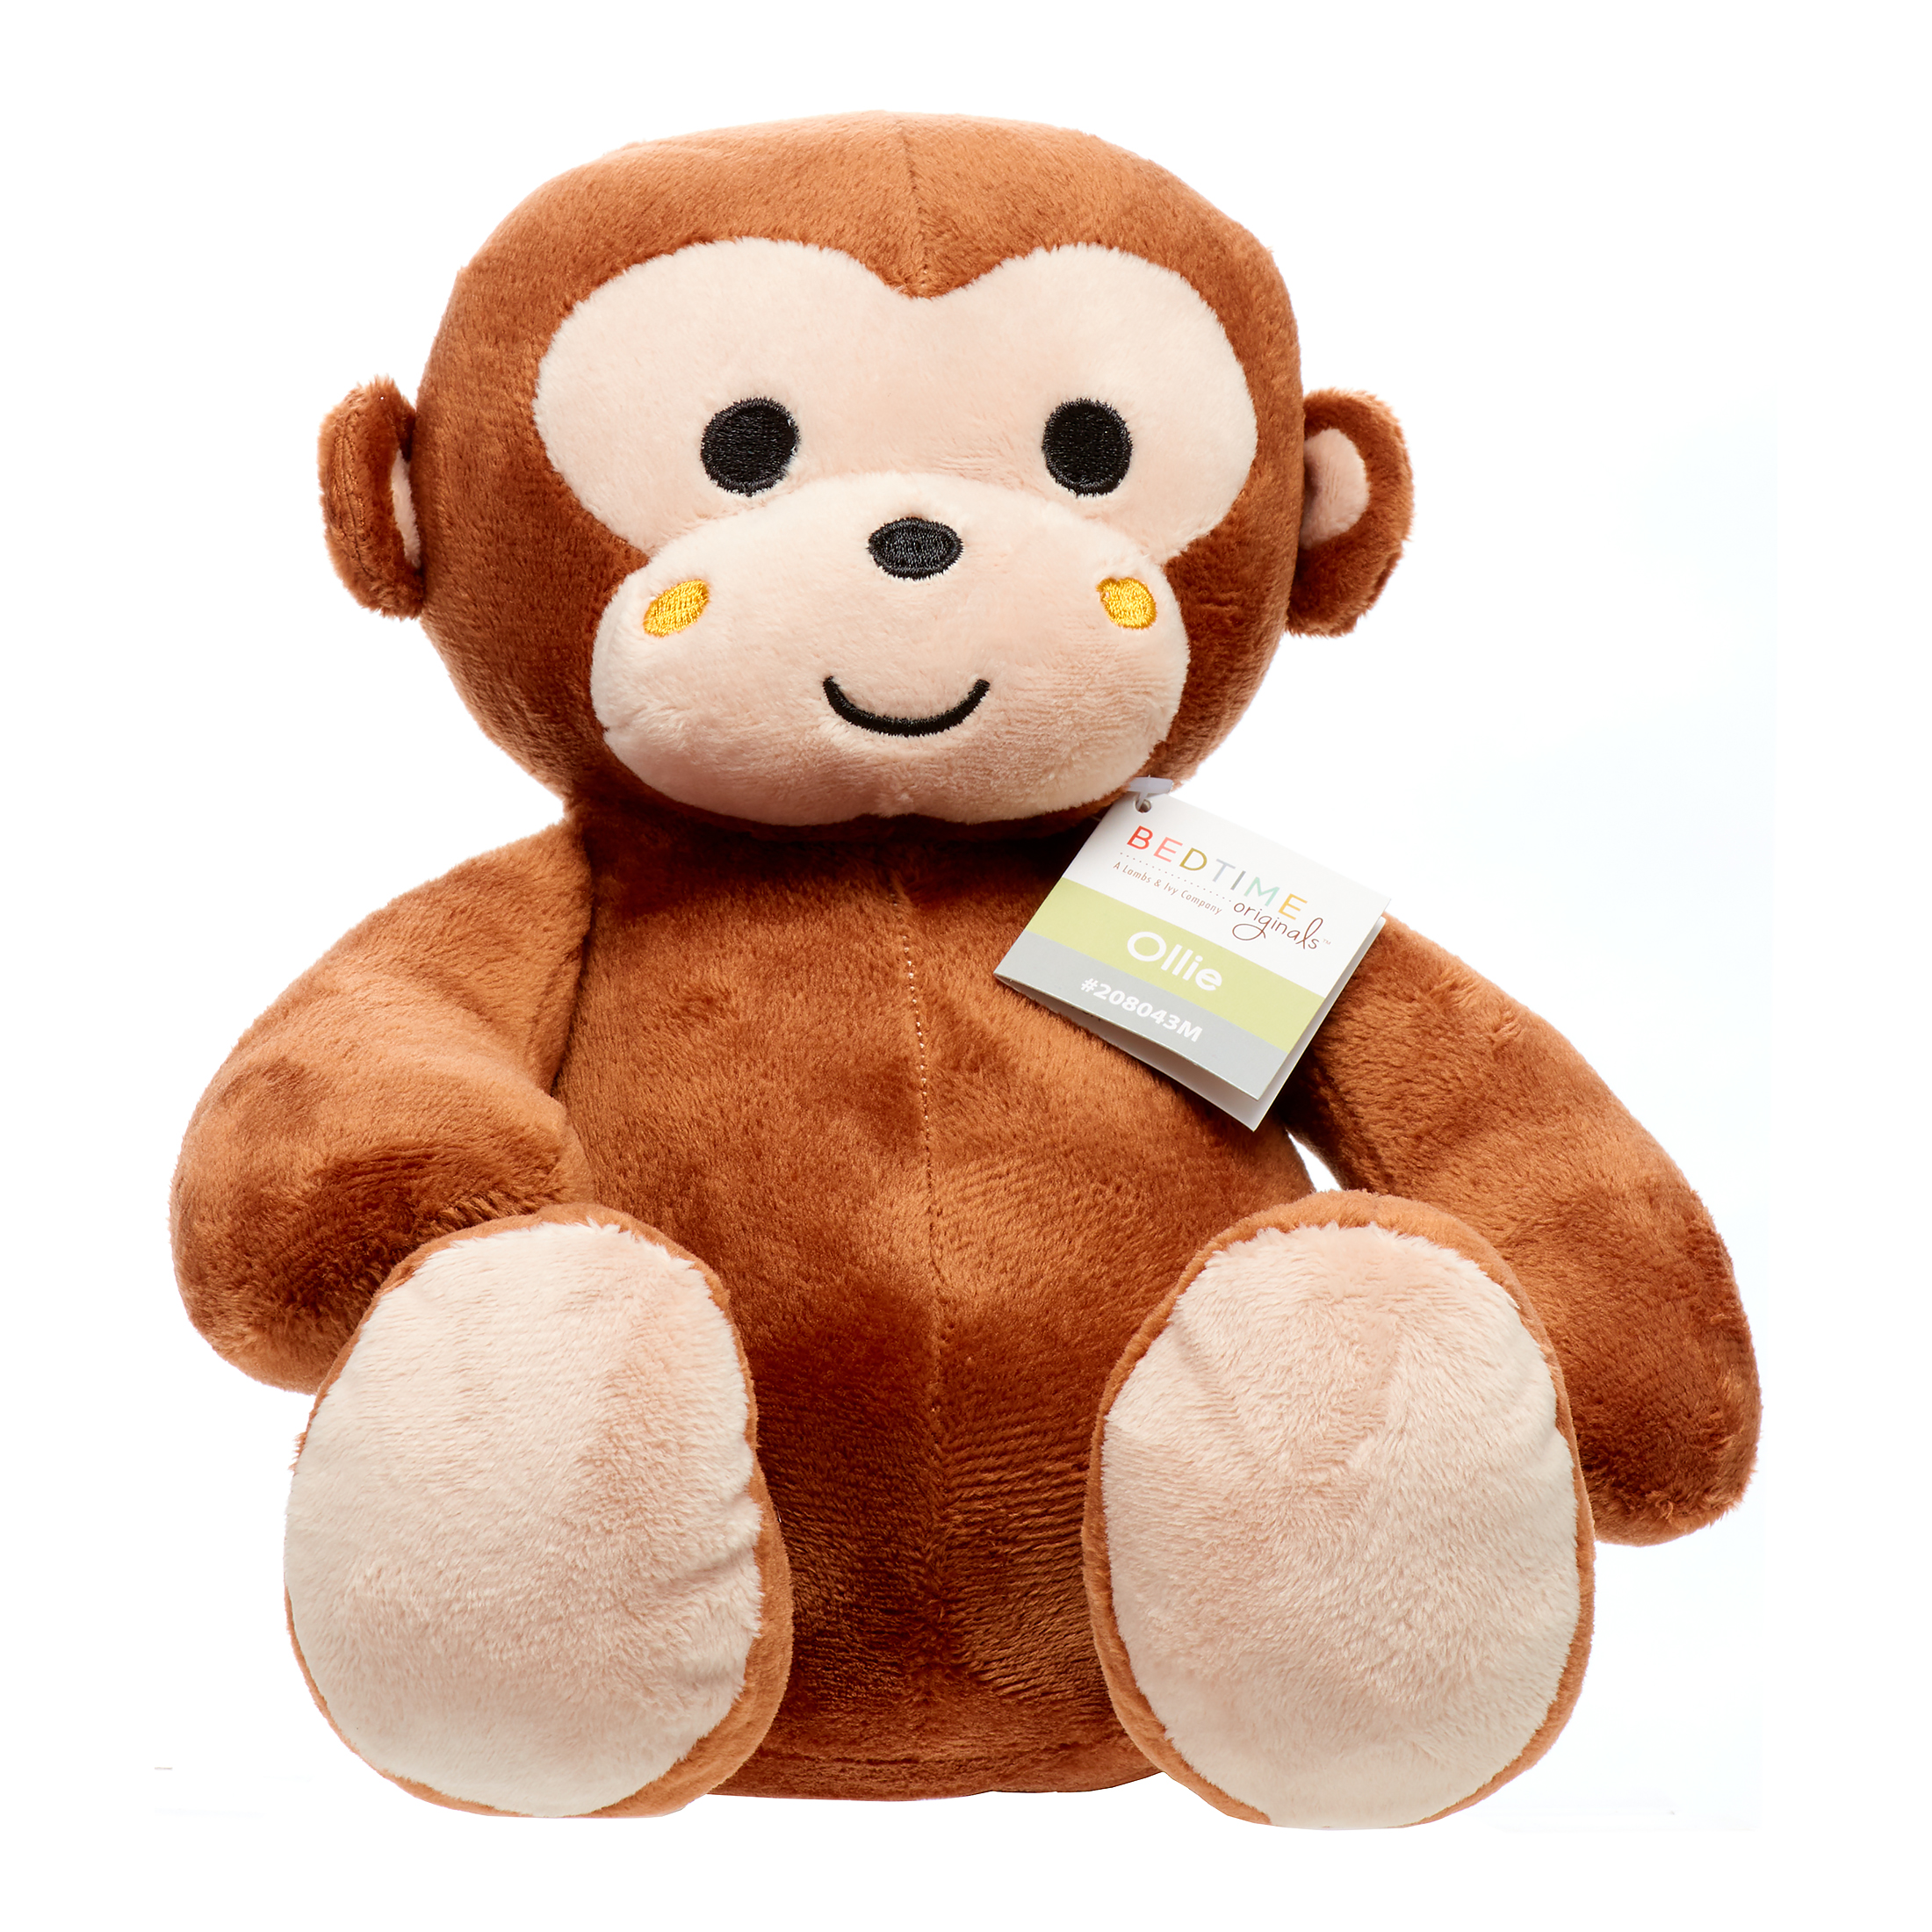 Bedtime Originals Brown Plush Monkey Stuffed Animal - Ollie - image 2 of 6